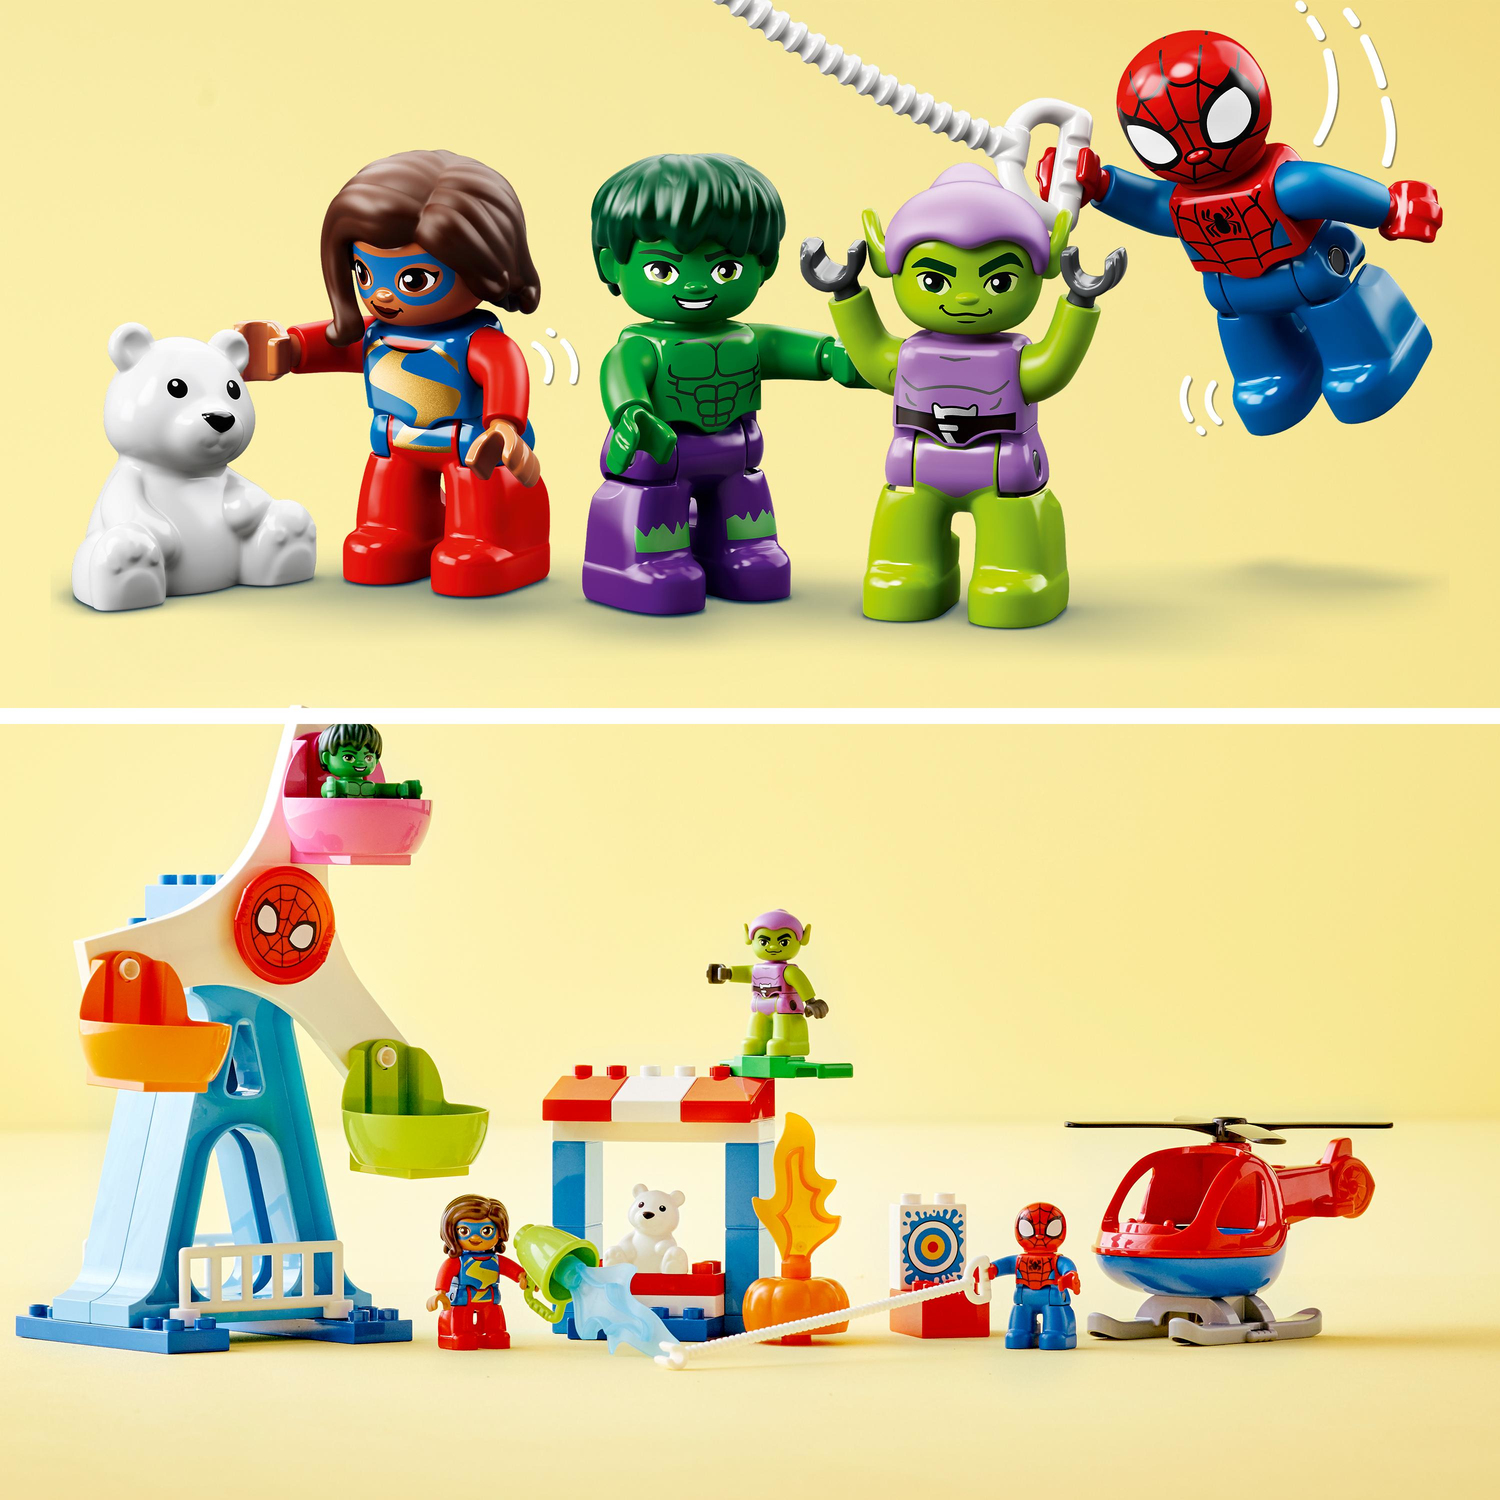 LEGO DUPLO Spider-Man & Friends: Funfair Set - Imagine That Toys